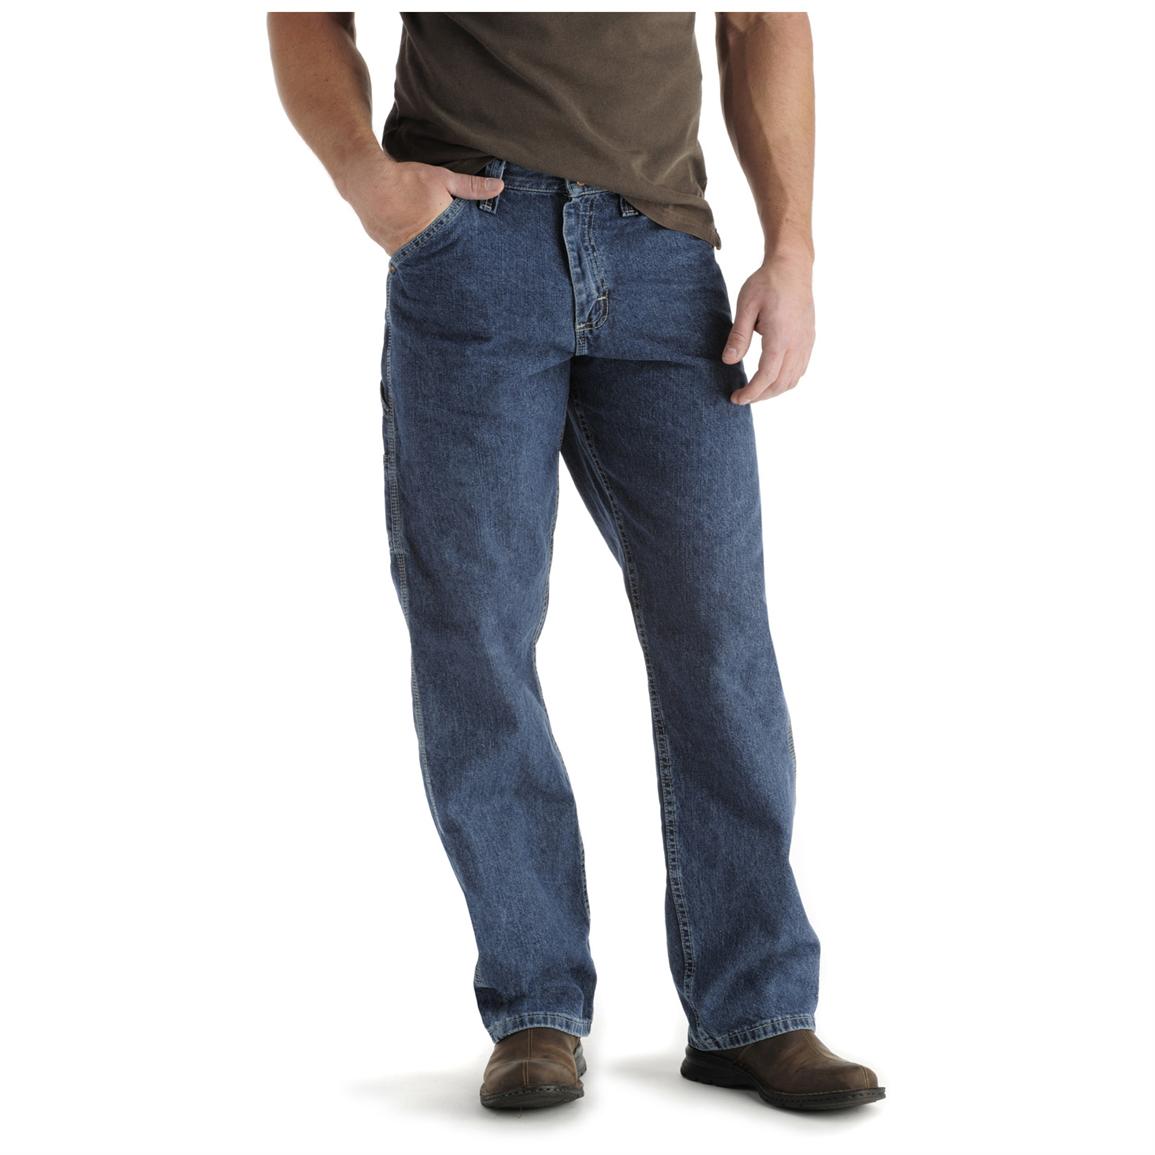 Lee® Carpenter Jeans - 226688, Jeans & Pants at Sportsman's Guide